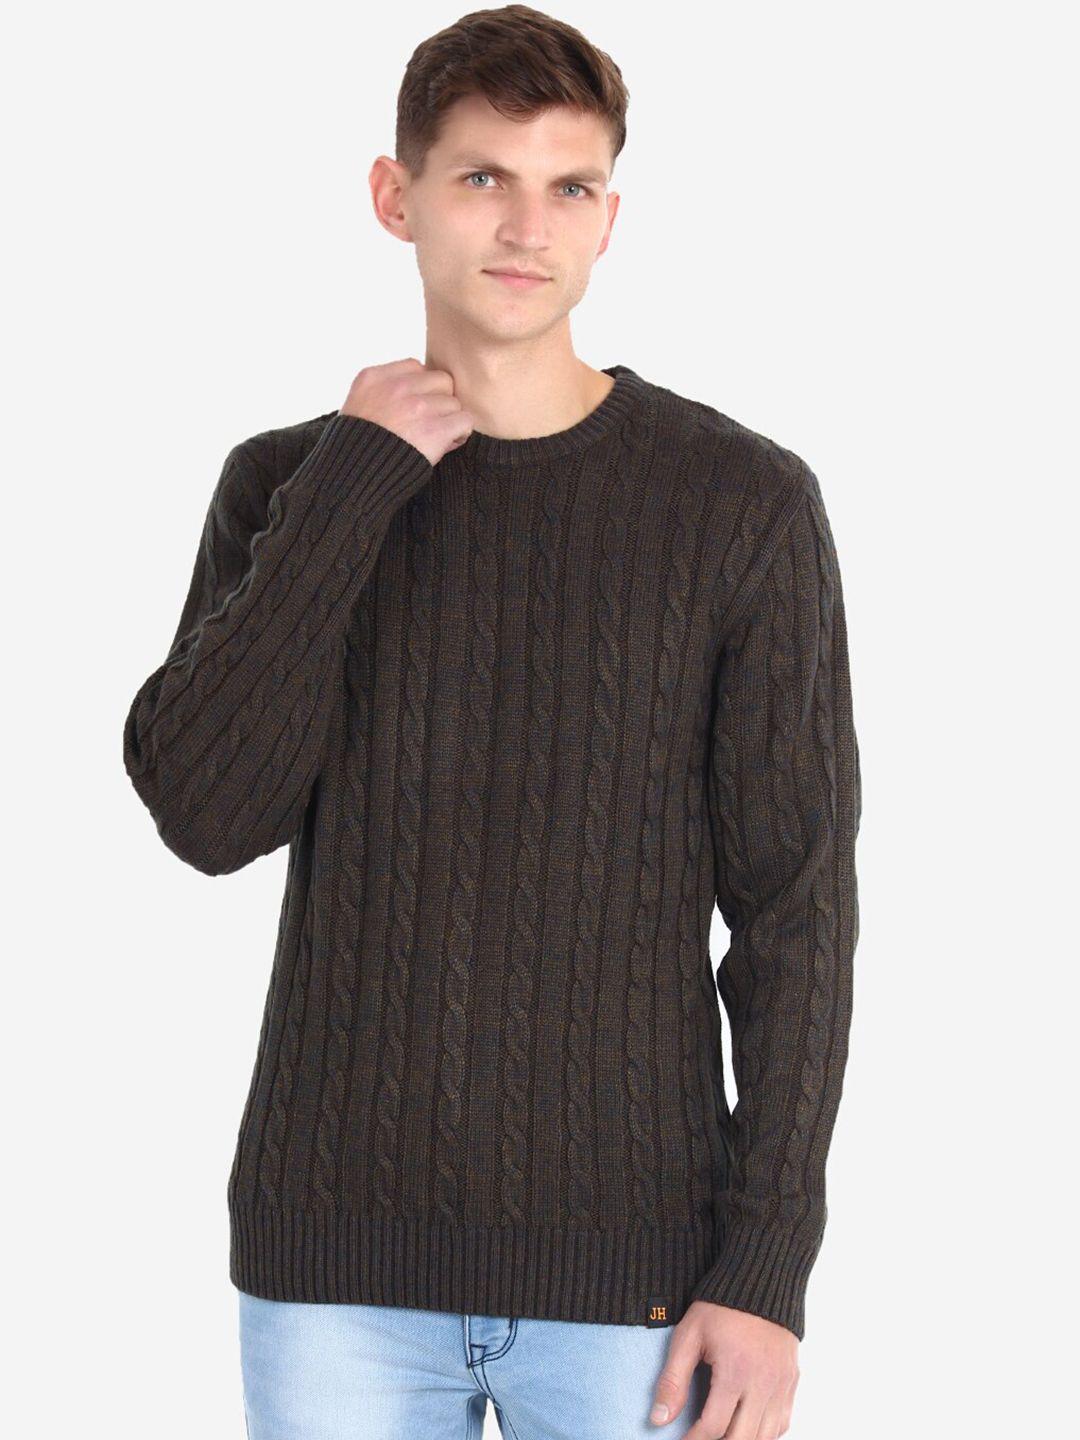 joe-hazel-men-khaki-acrylic-cable-knit-pullover